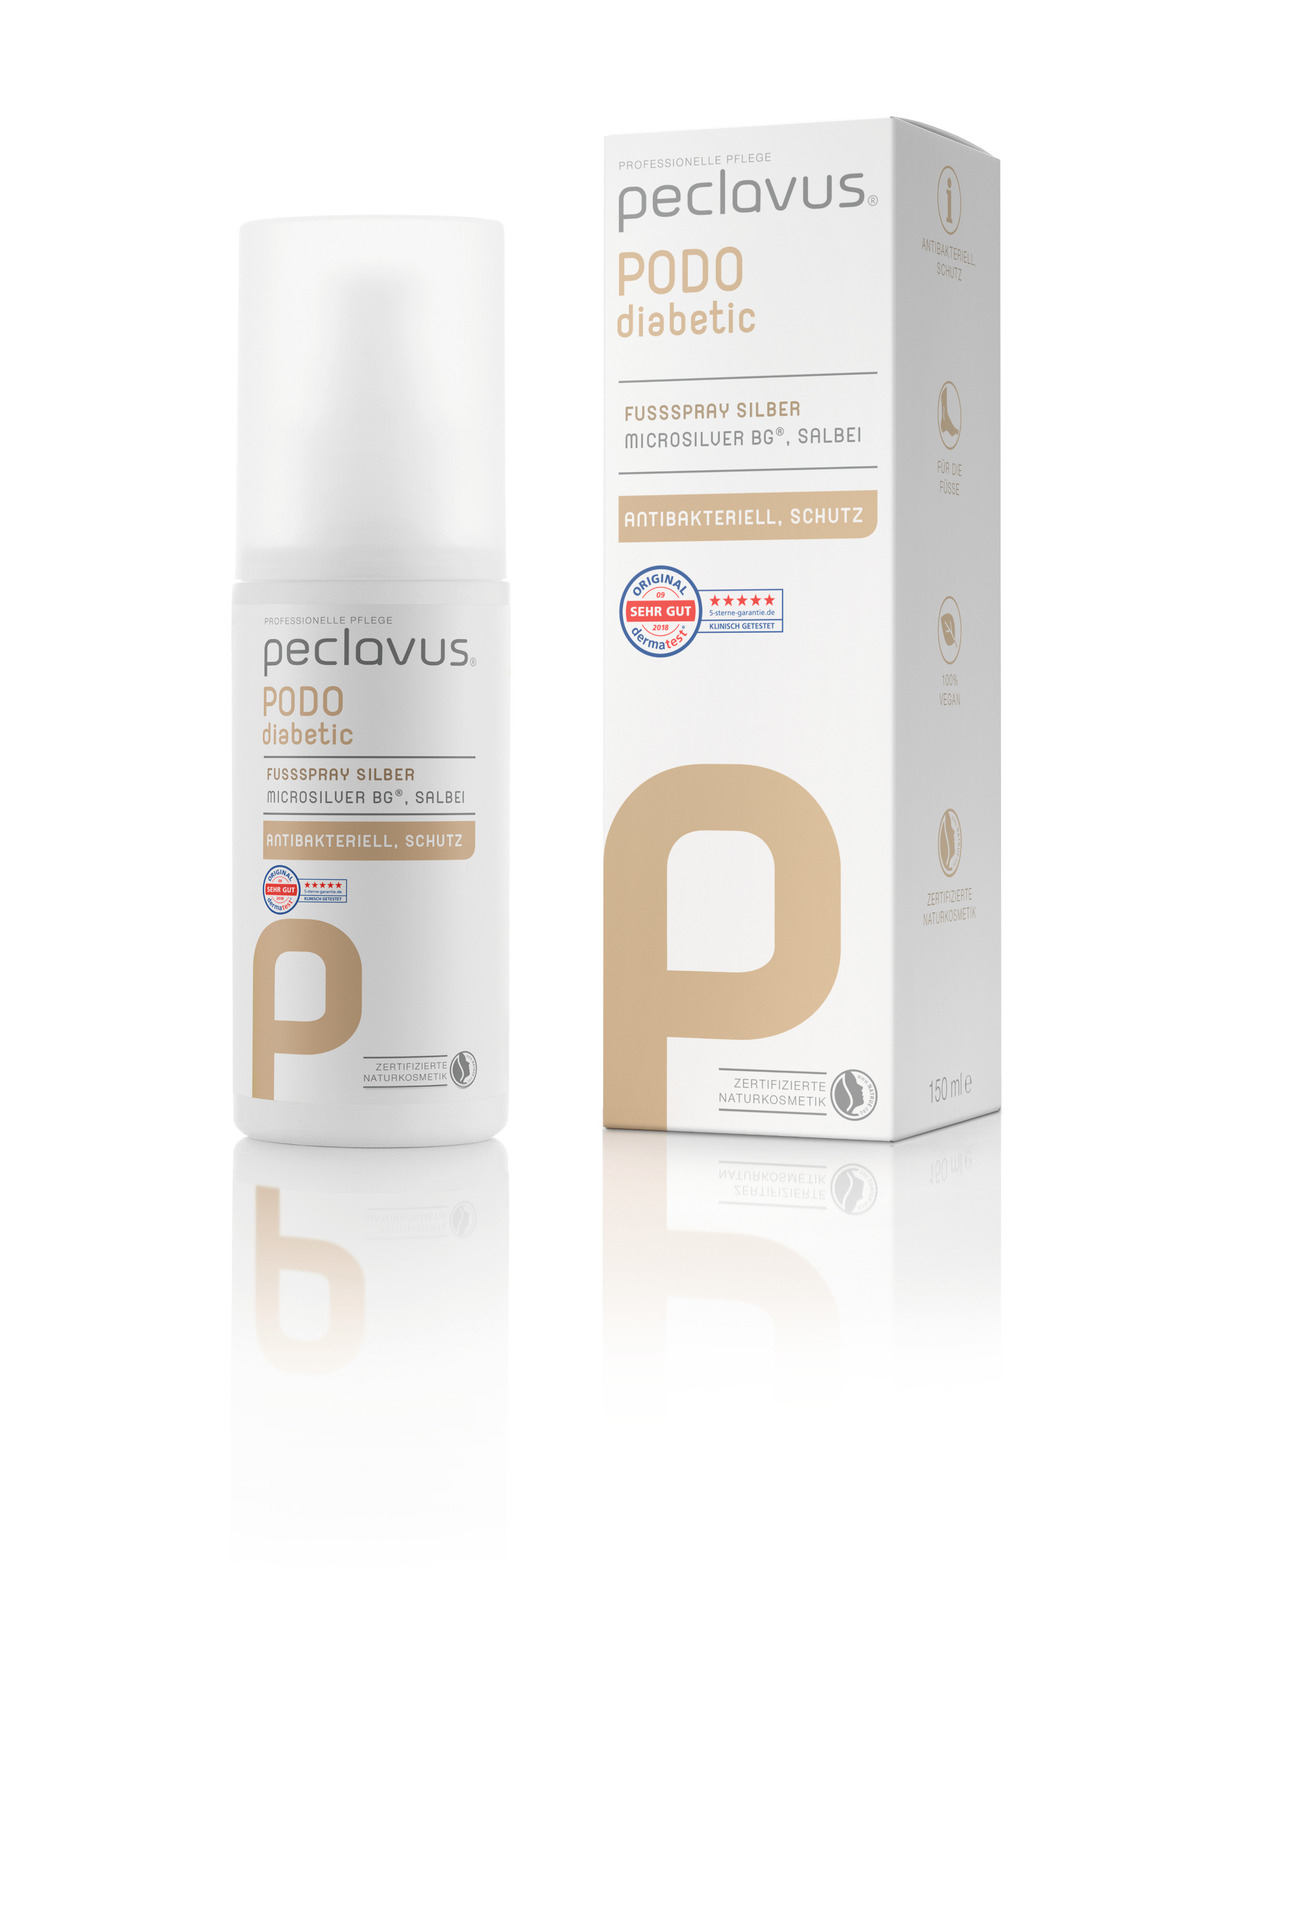 Peclavus PODOdiabetic Fußspray Silber | 150 ml